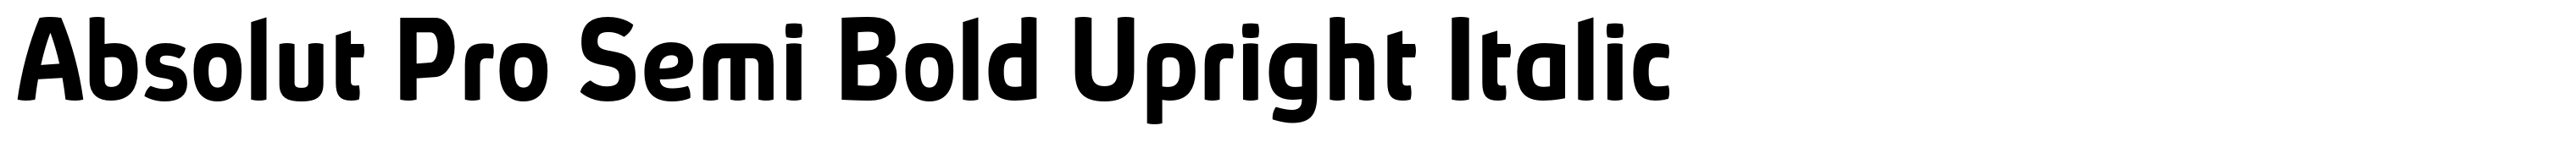 Absolut Pro Semi Bold Upright Italic